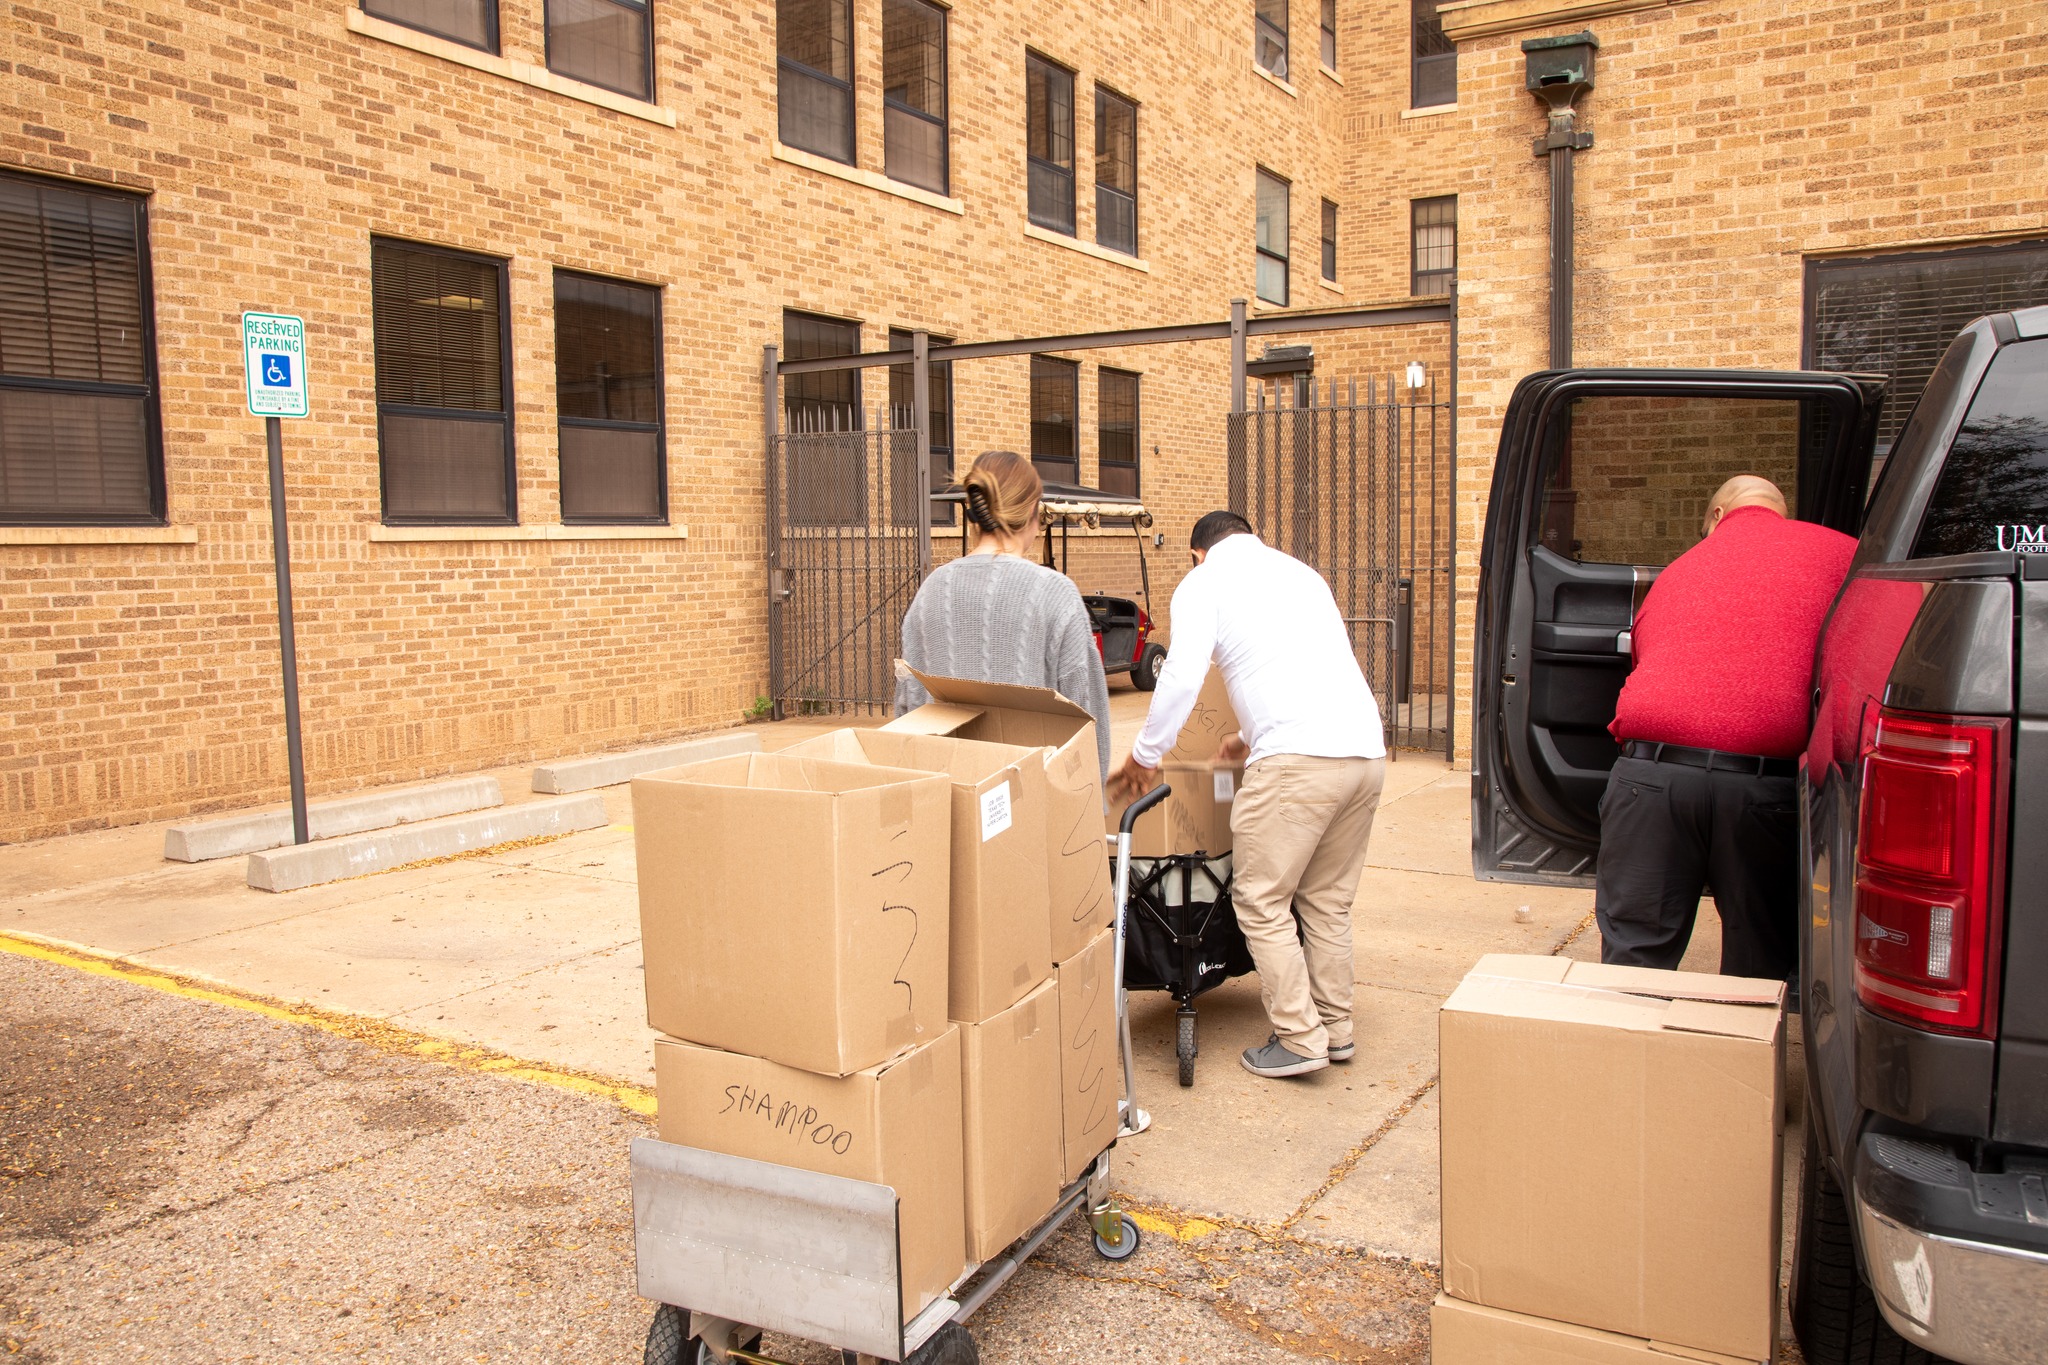 University Student Housing donates items to Raider Red Food Pantry